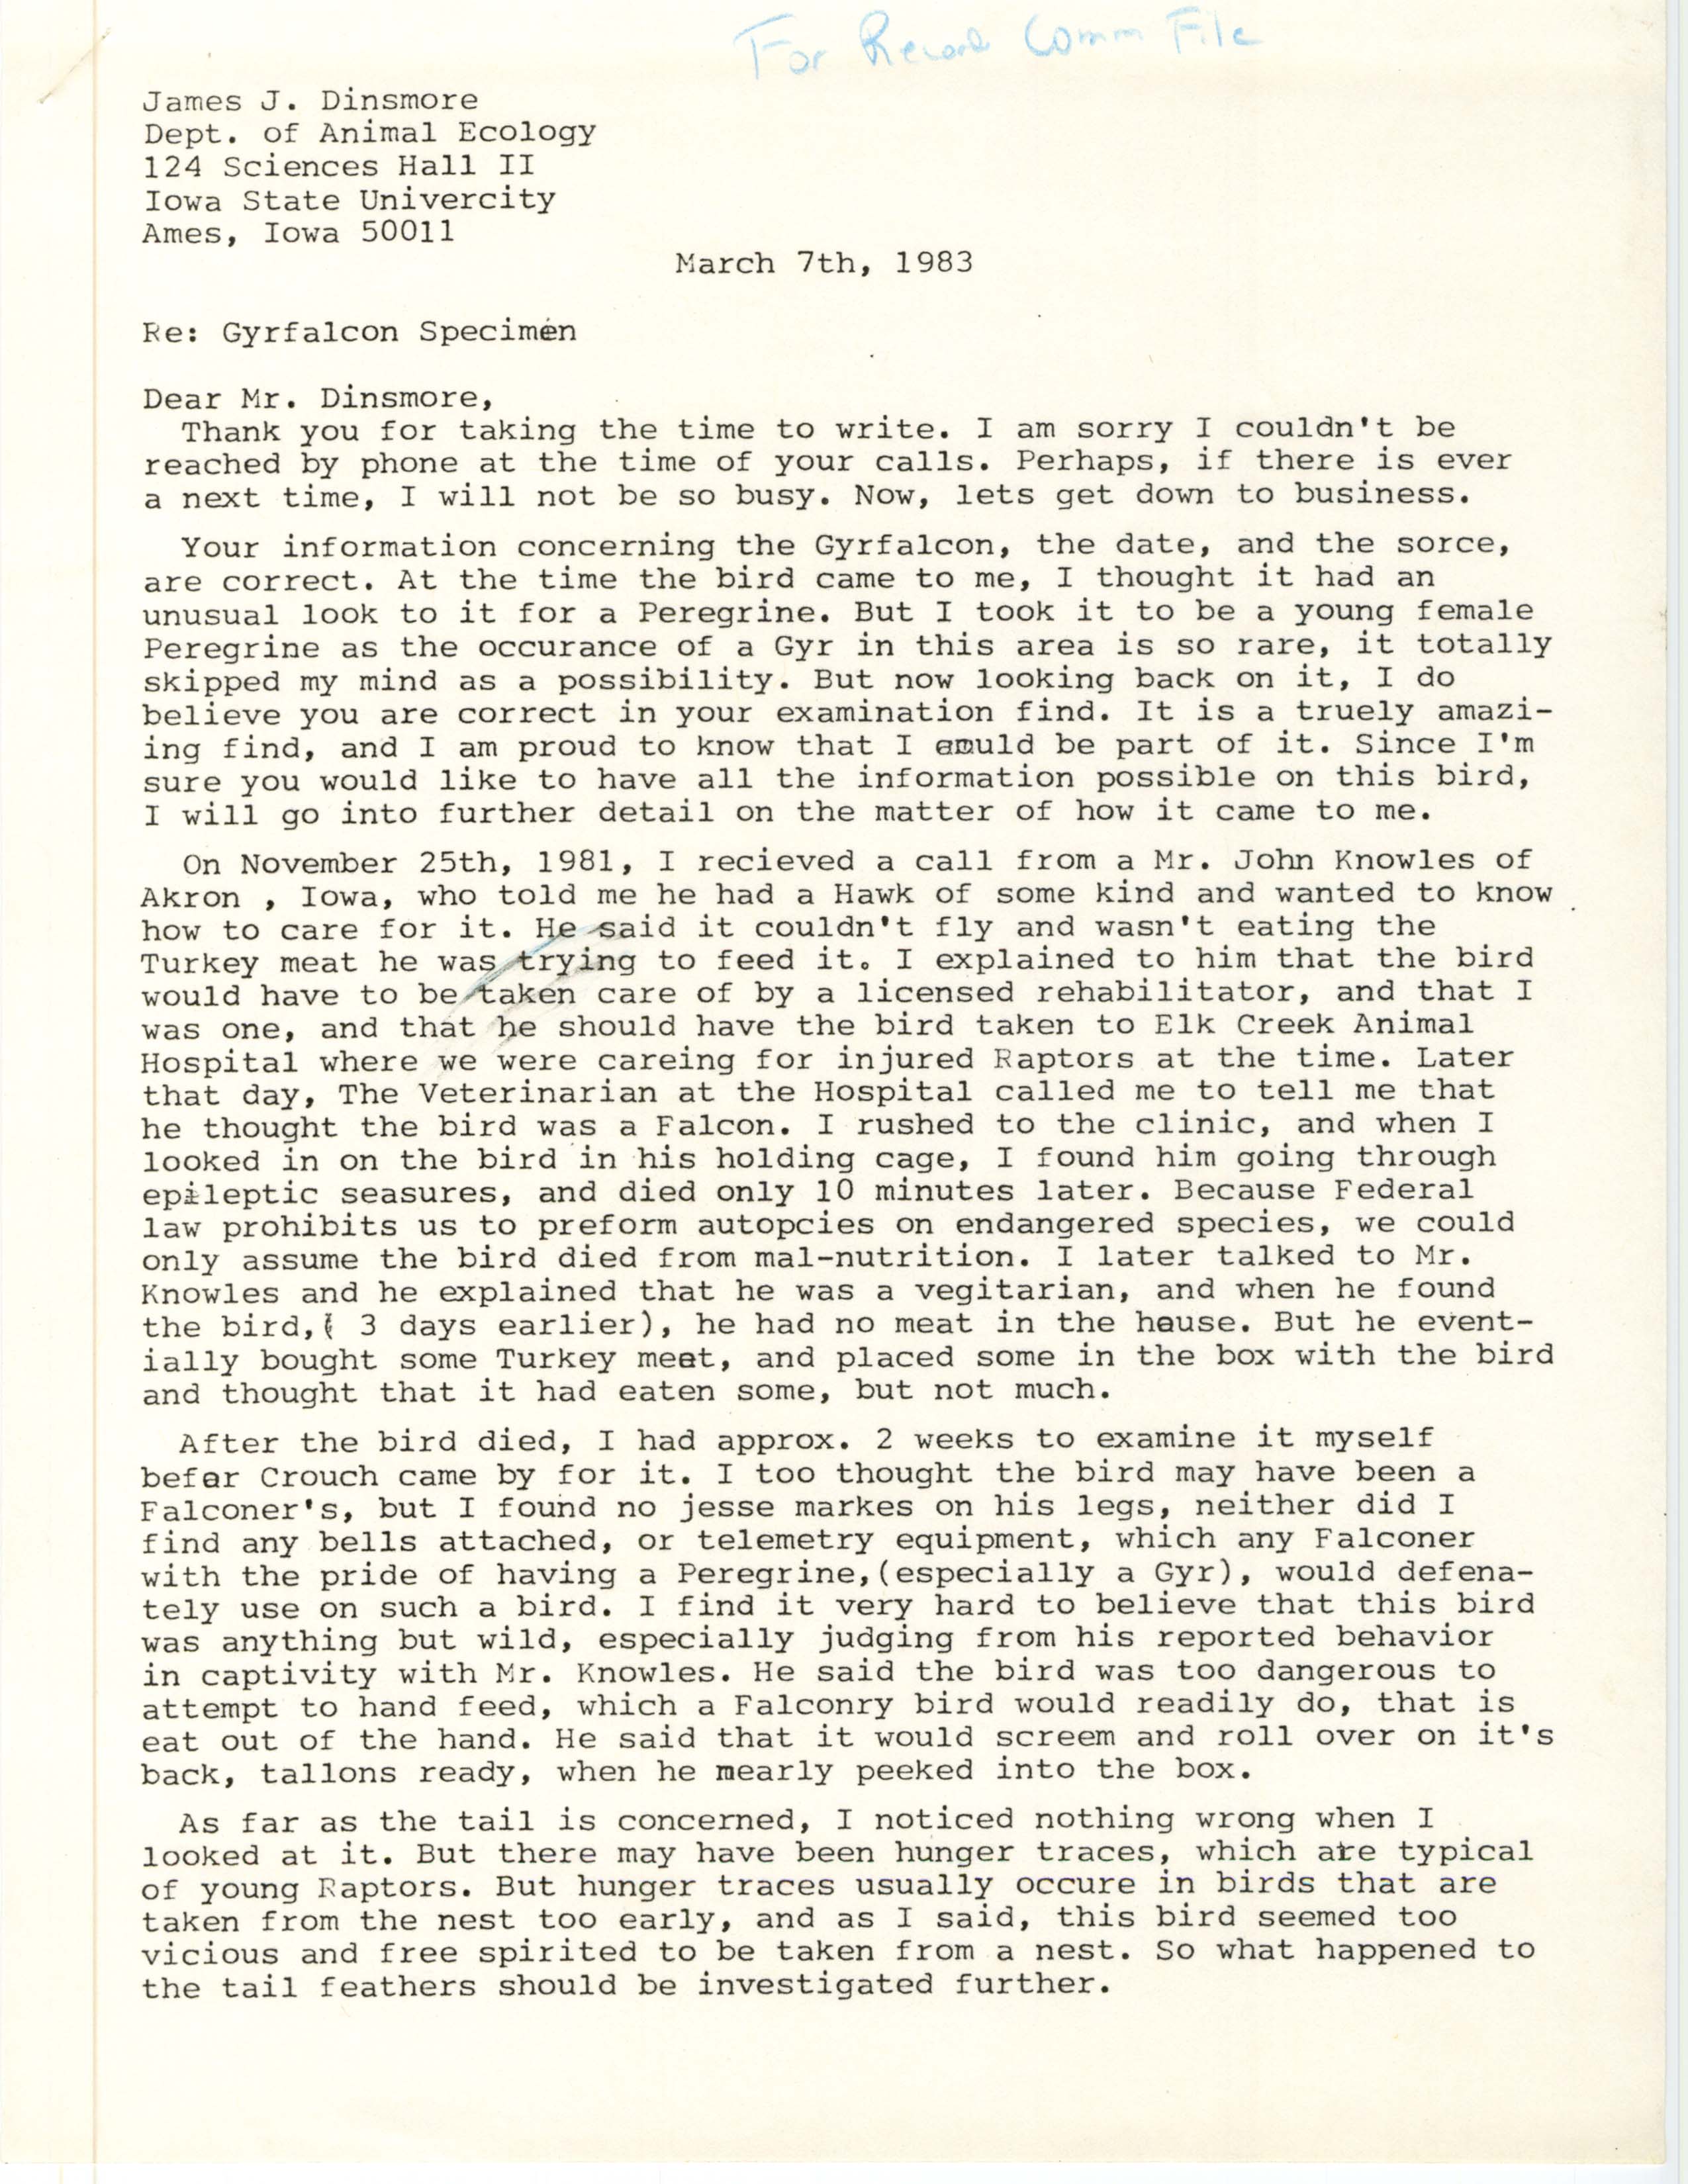 Doug Trapp letter to James Dinsmore regarding sick Gyrfalcon, March 7, 1983